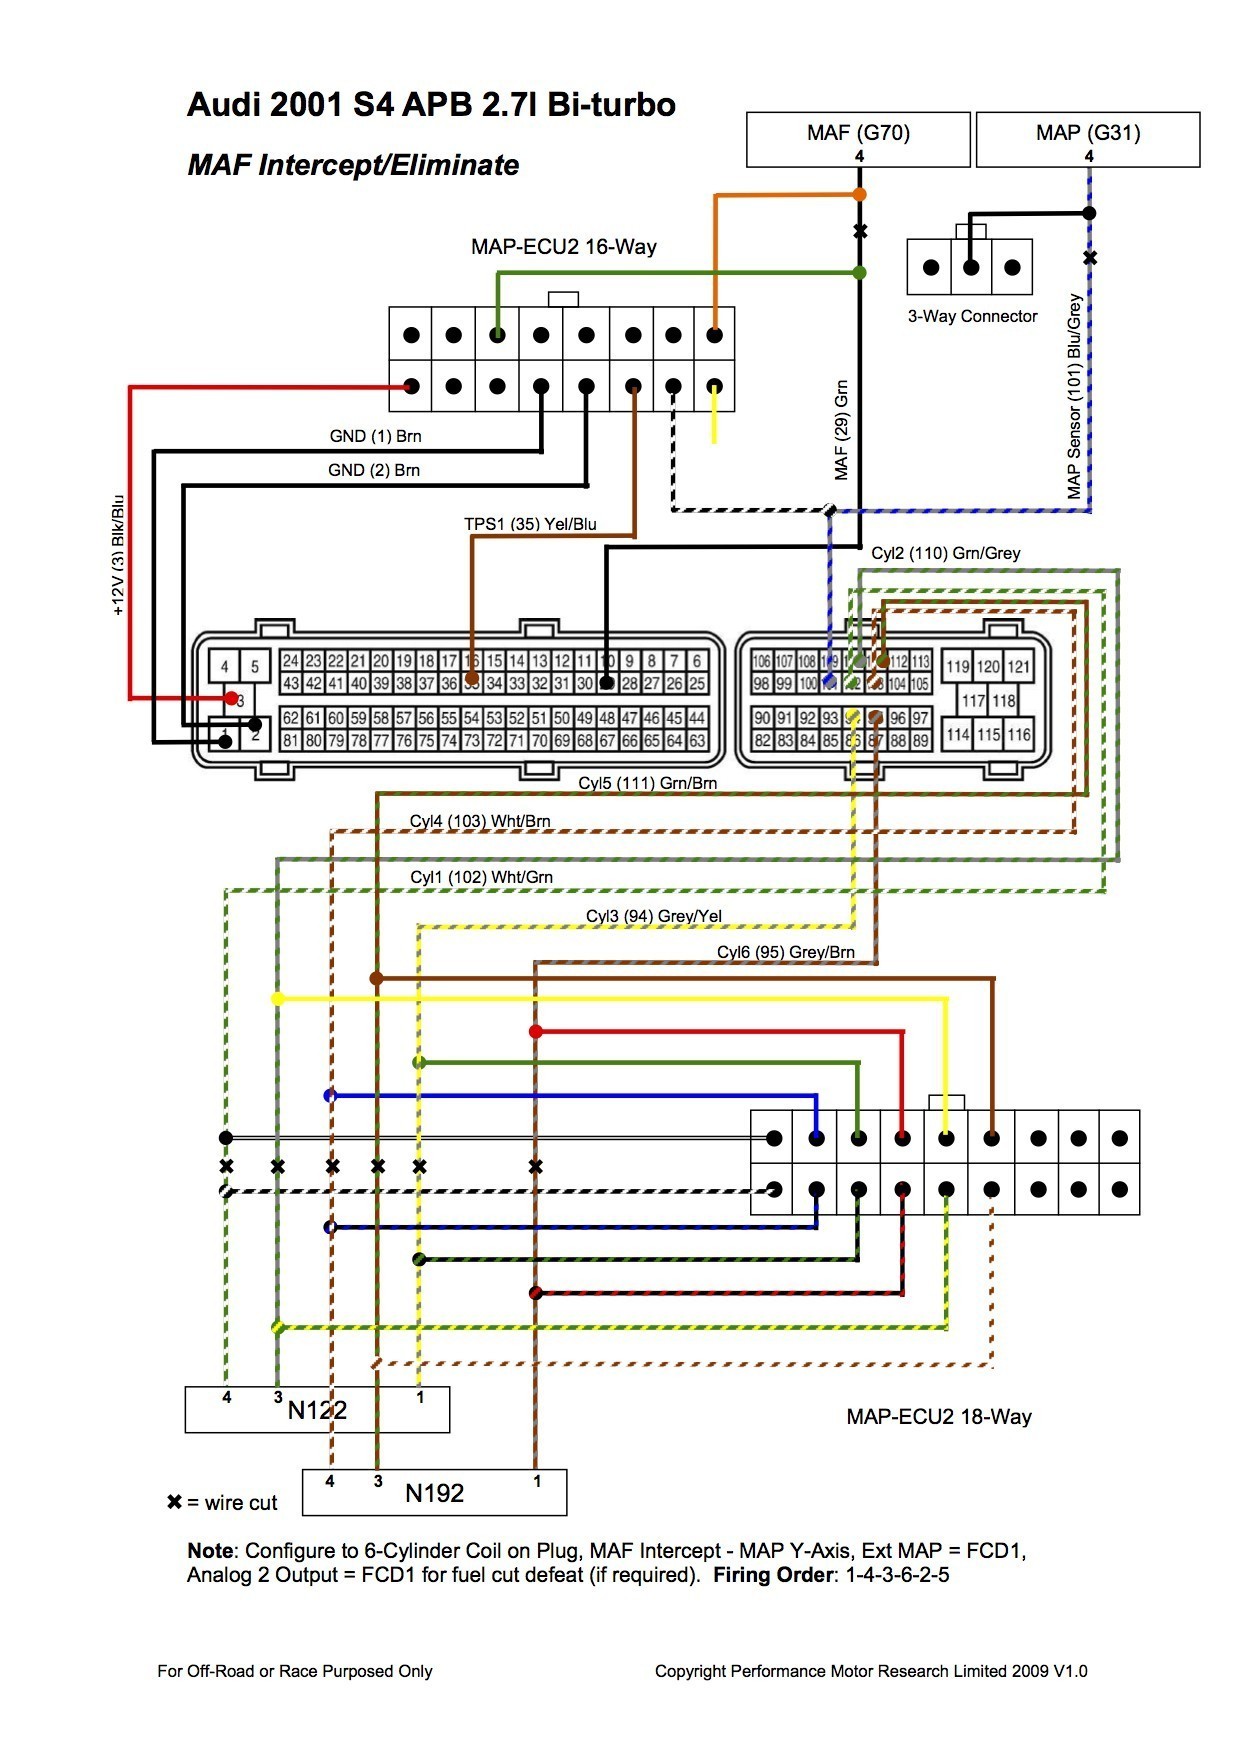 kenwood dnx7120 wiring diagram kenwood excelon ddx7015 wiring rh enginediagram net Kenwood Amplifier Wiring Diagram Kenwood Harness Diagram